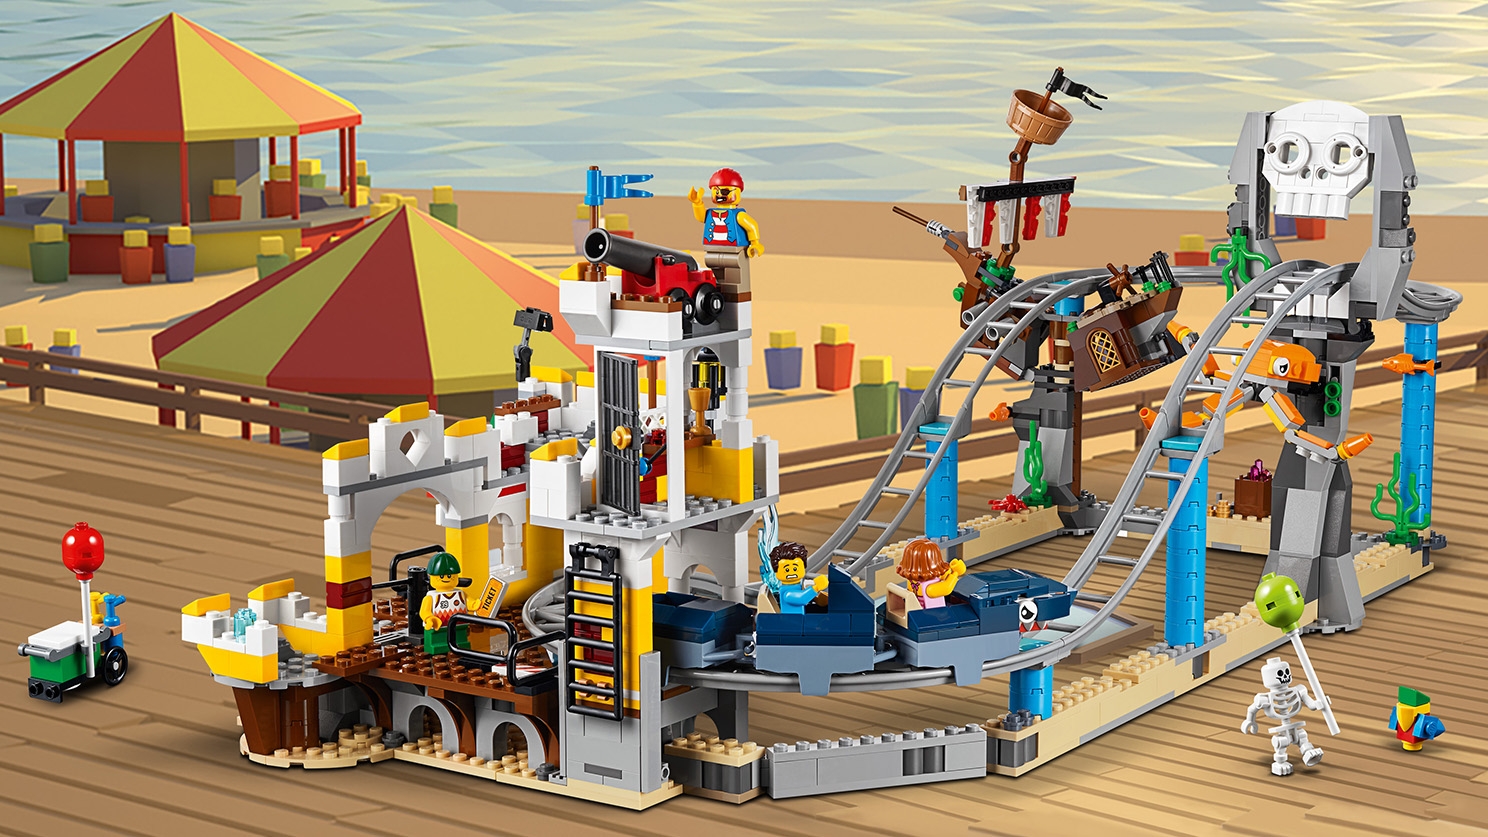 lego 31084 creator pirate roller coaster